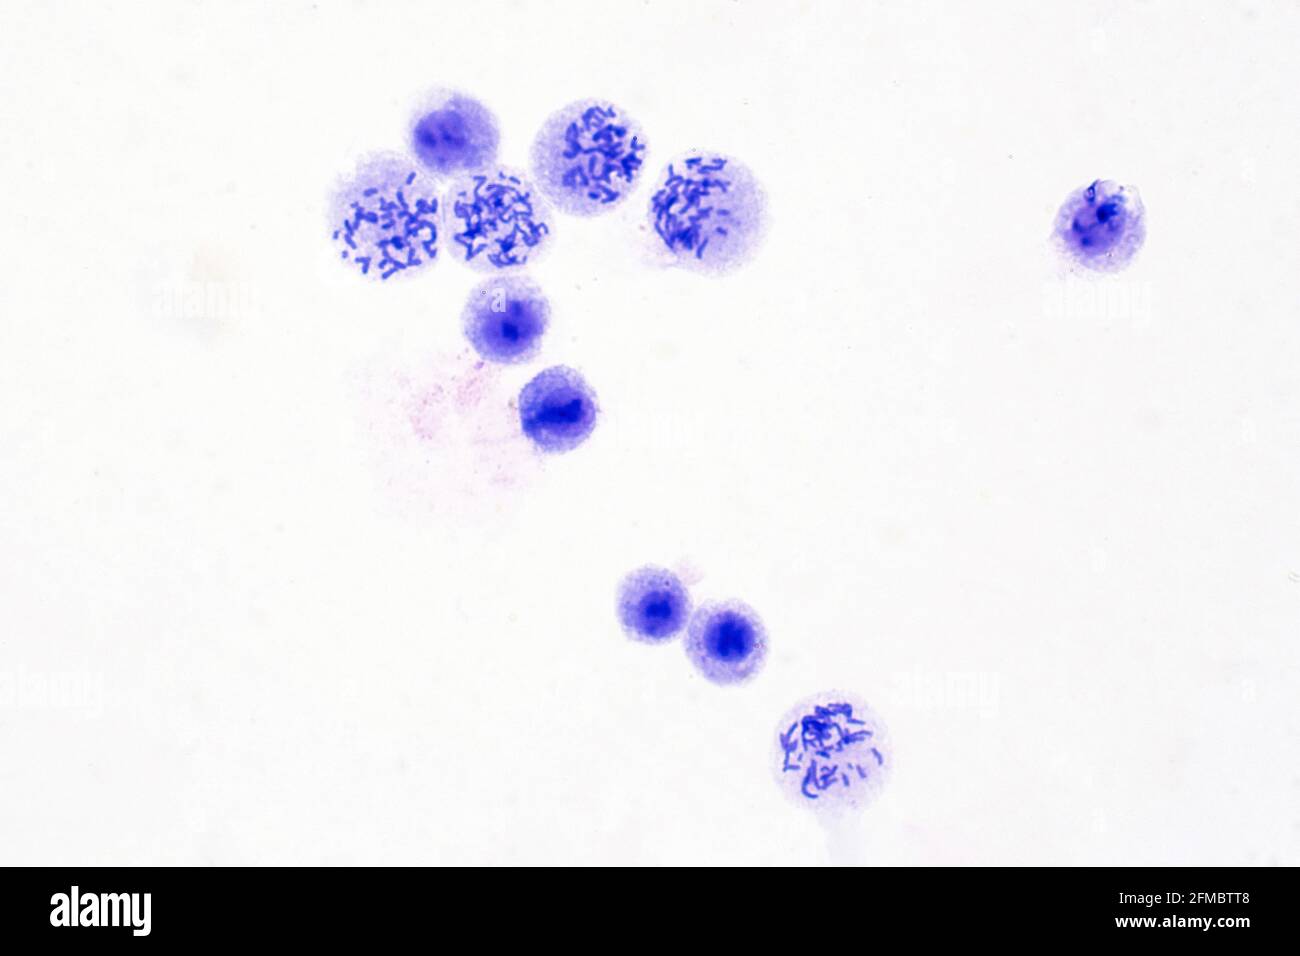 Human chromosomes, light micrograph Stock Photo